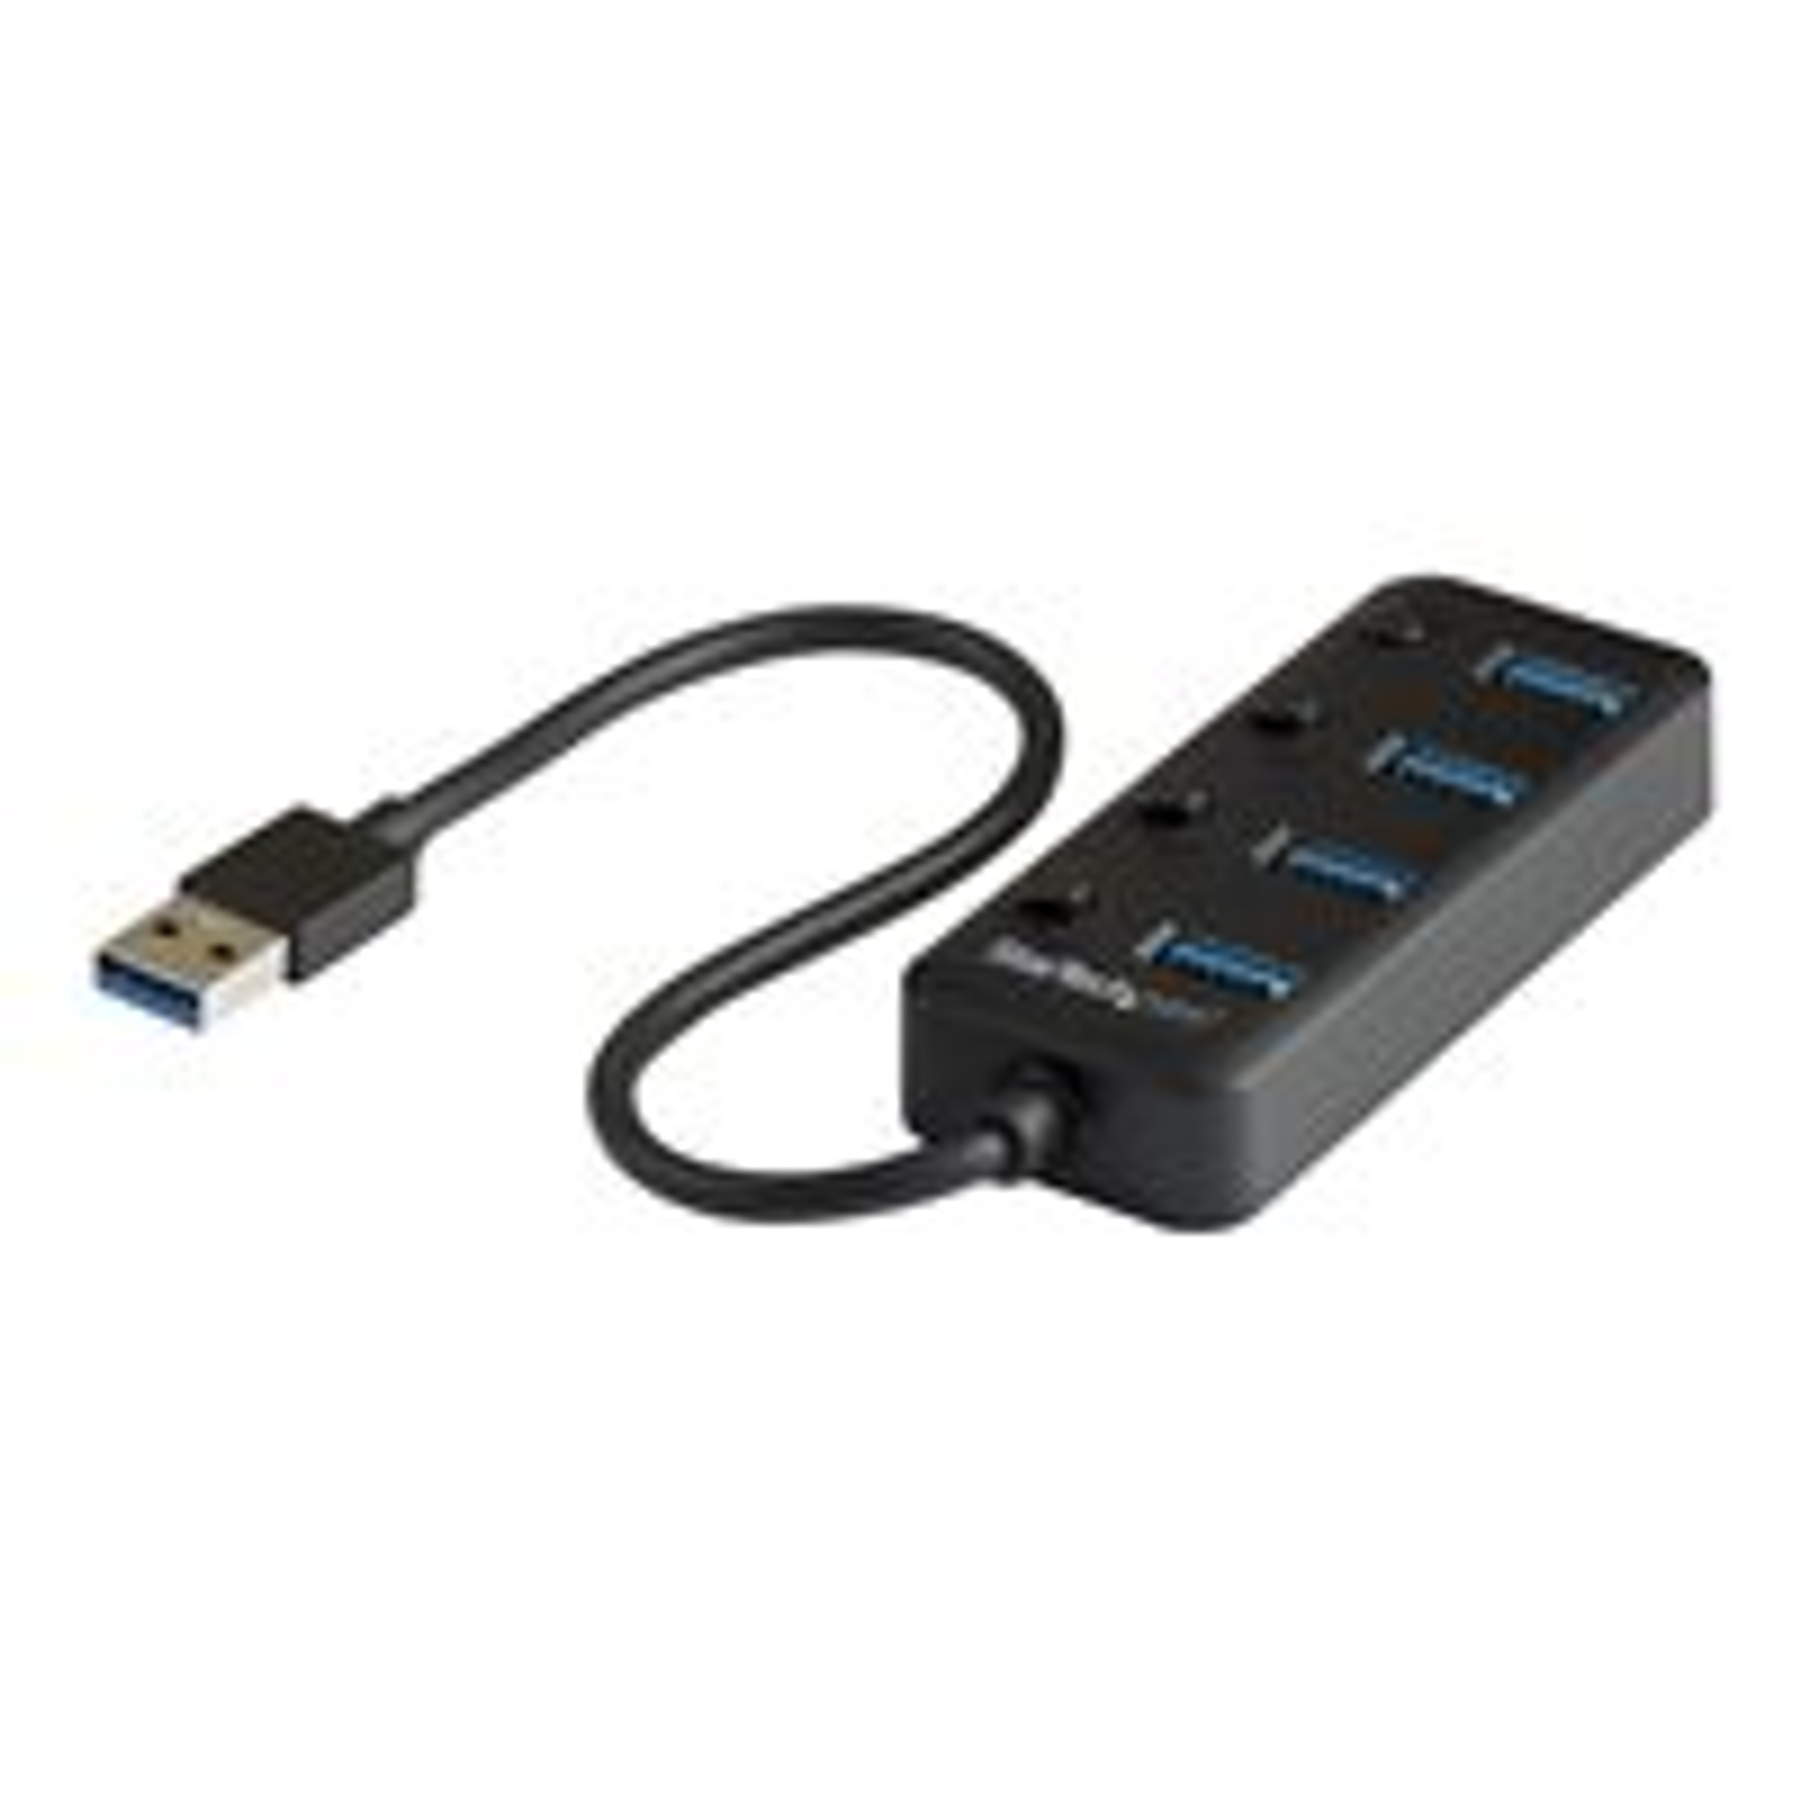 StarTech.com Hub USB 3.0 de 4 Puertos - Ladrón USB de 4 P